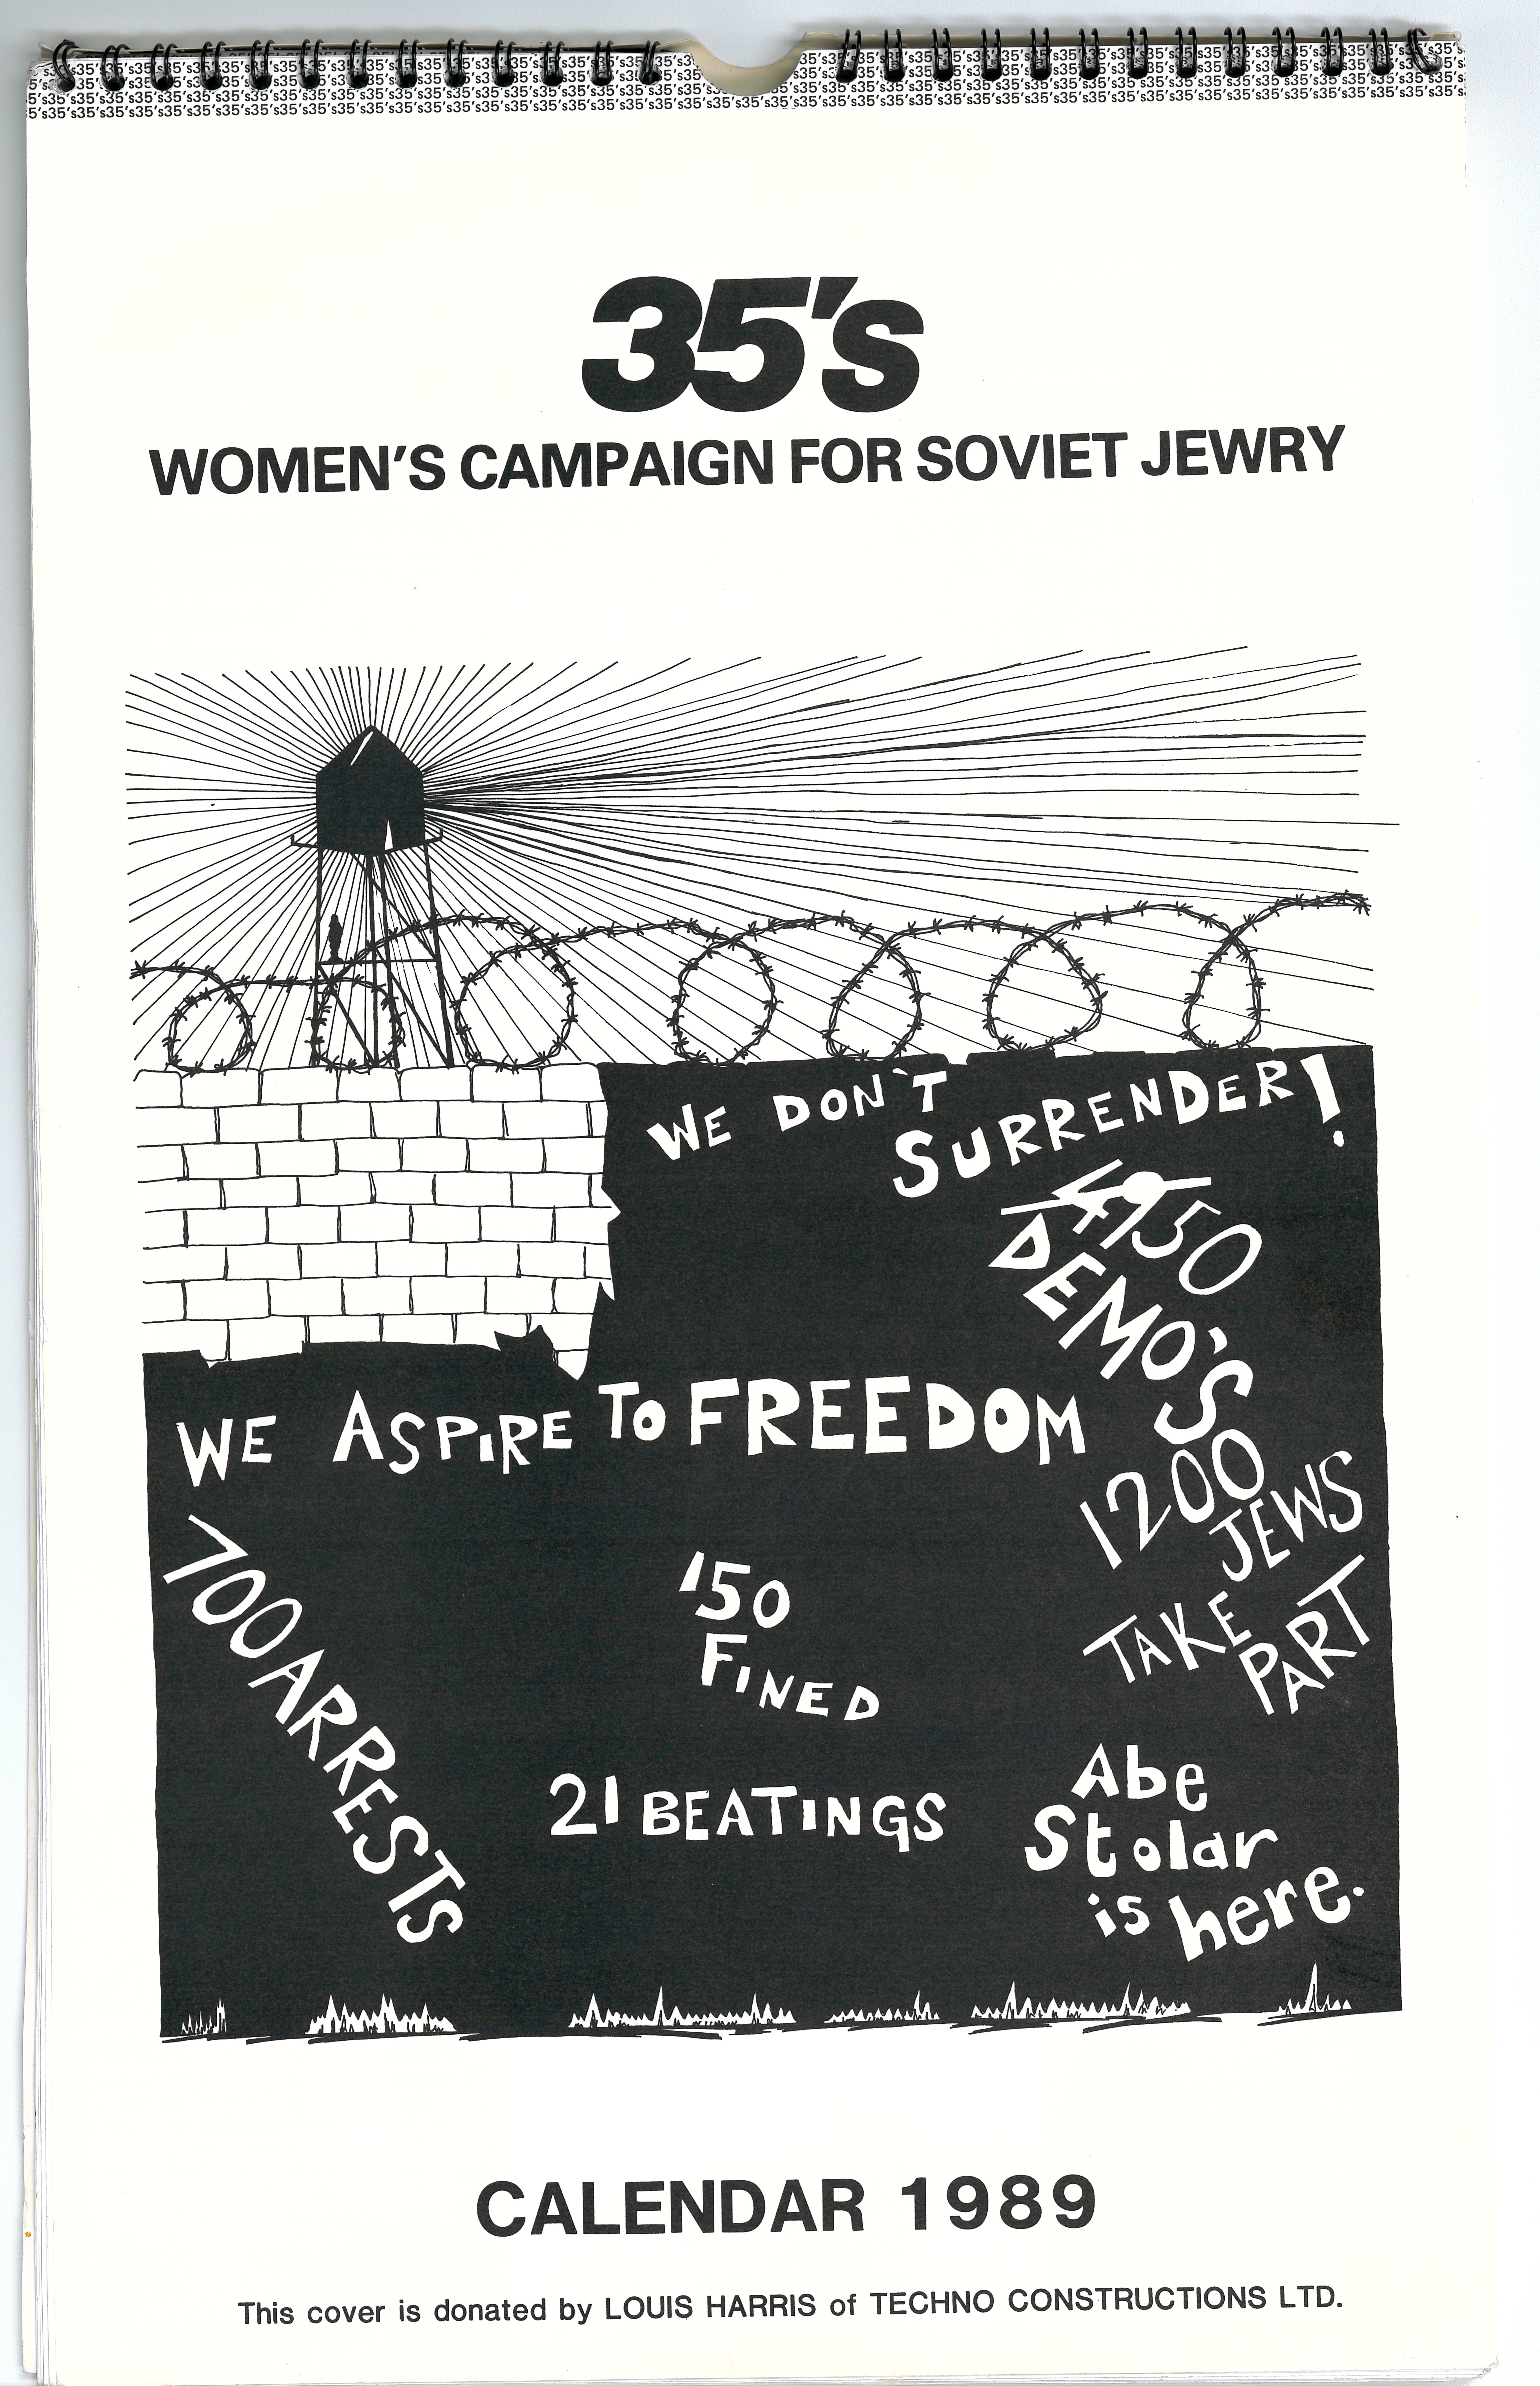 Women’s Campaign for Soviet Jewry calendar, 1989 [MS 434 A4249 5/6]